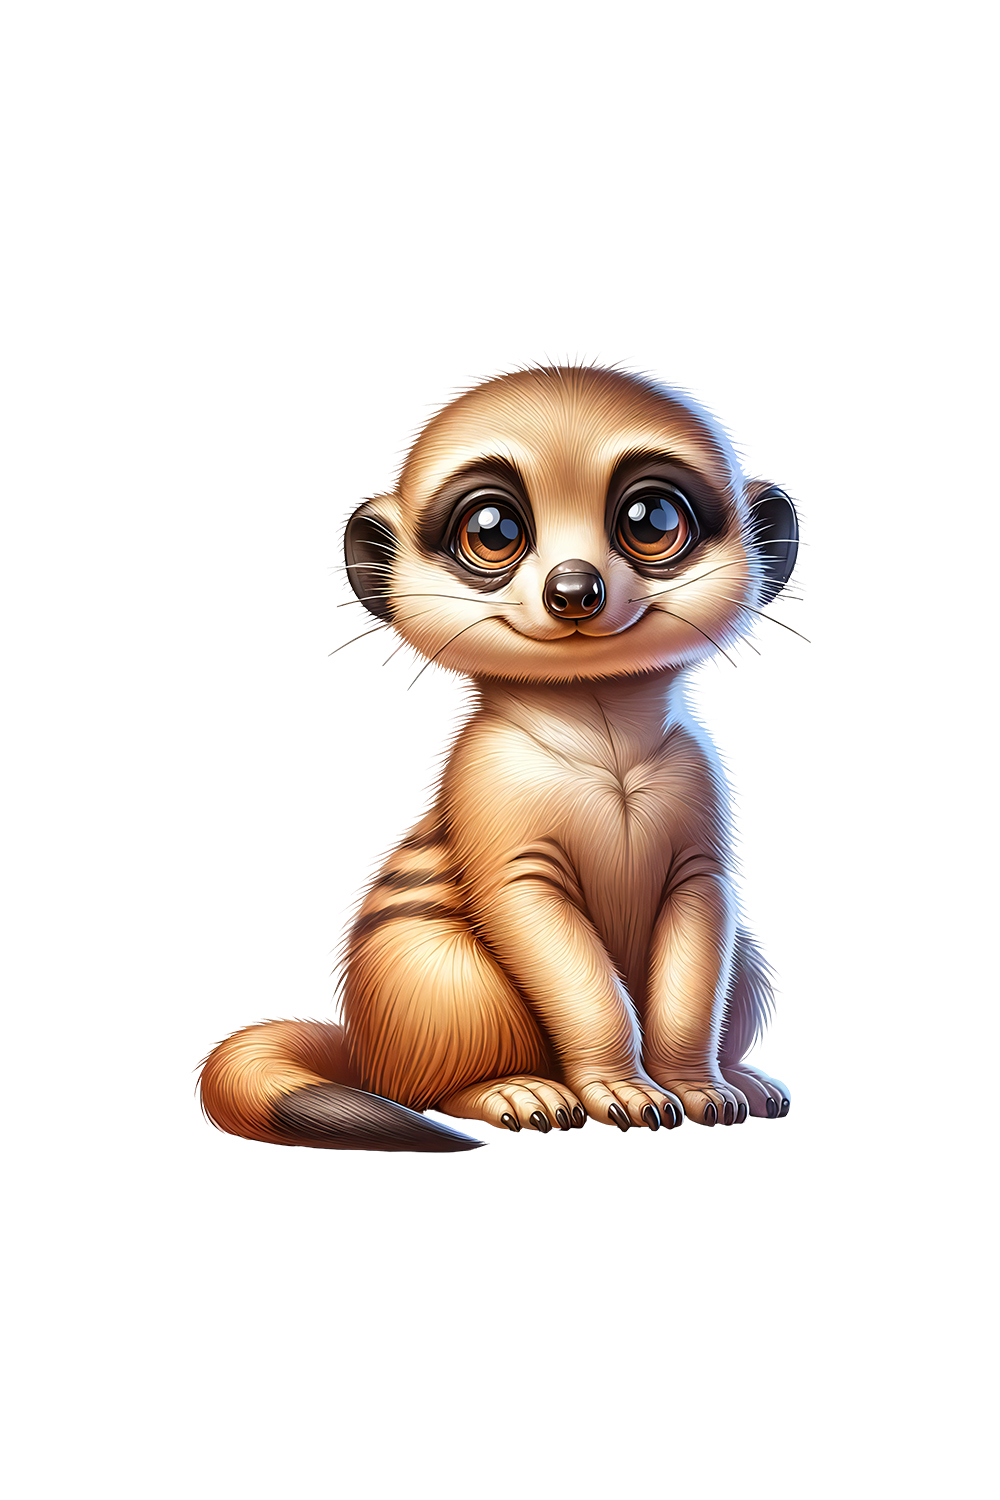 Cute Meerkat Clipart | Animals Clipart | PNG pinterest preview image.